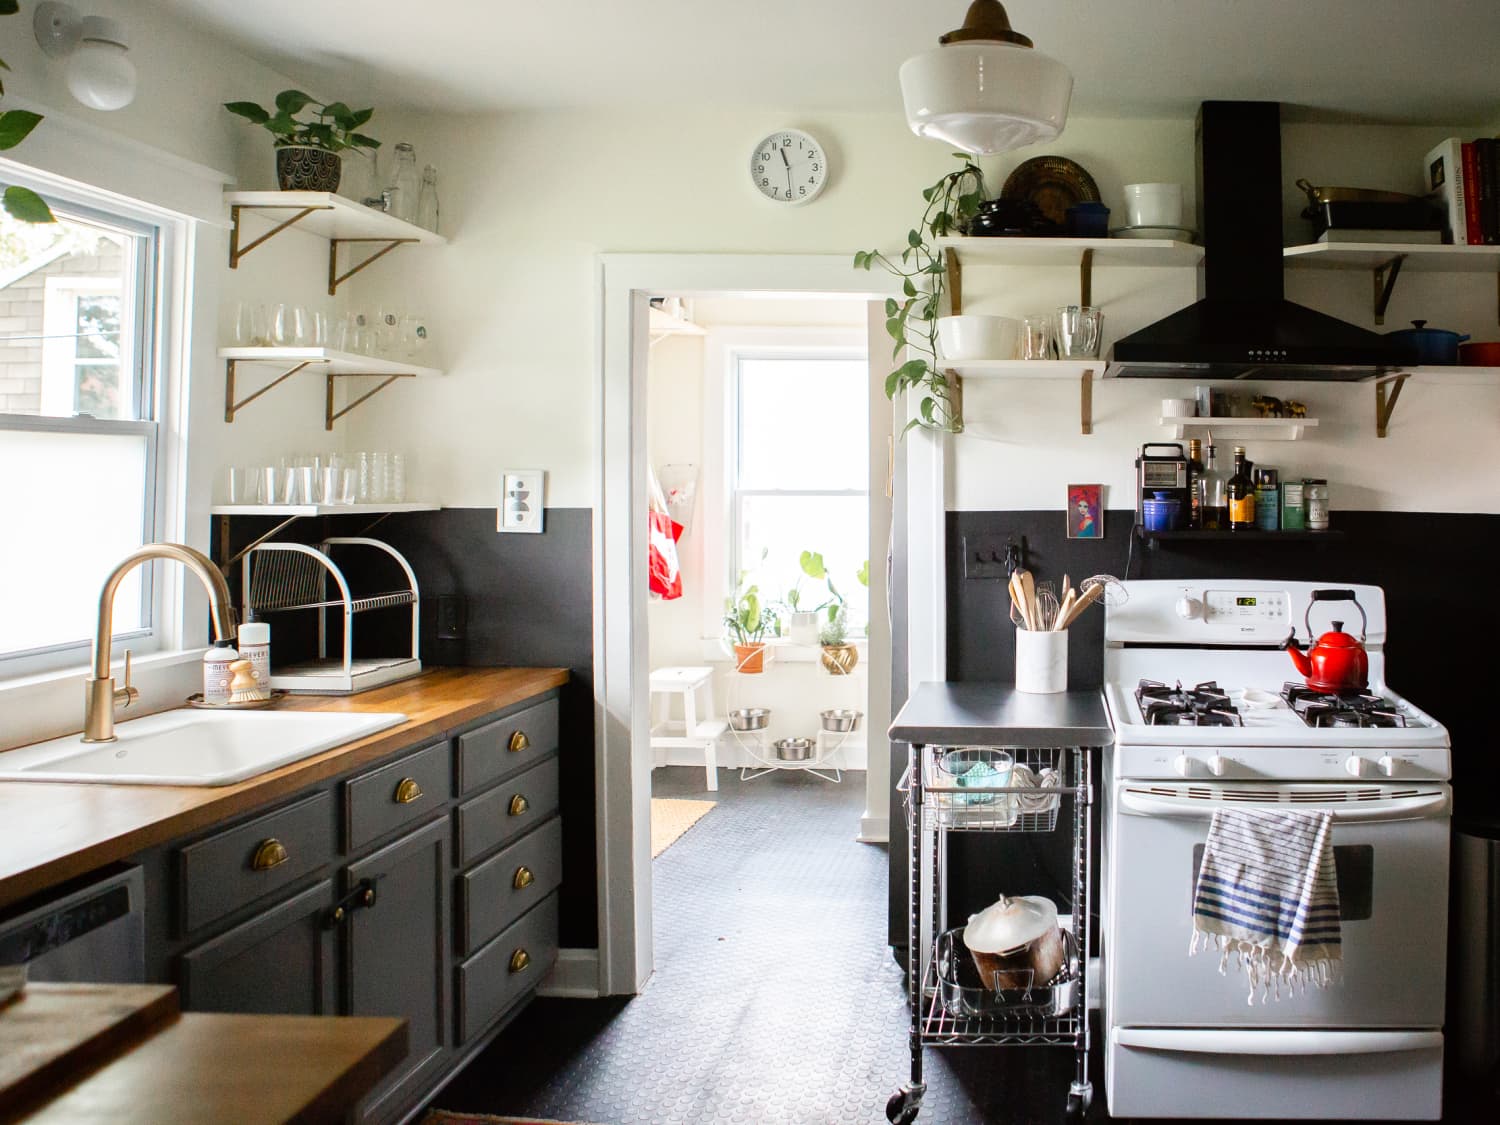 Transitions Kitchens and Baths – Top 6 Kitchen Cabinet Storage Ideas